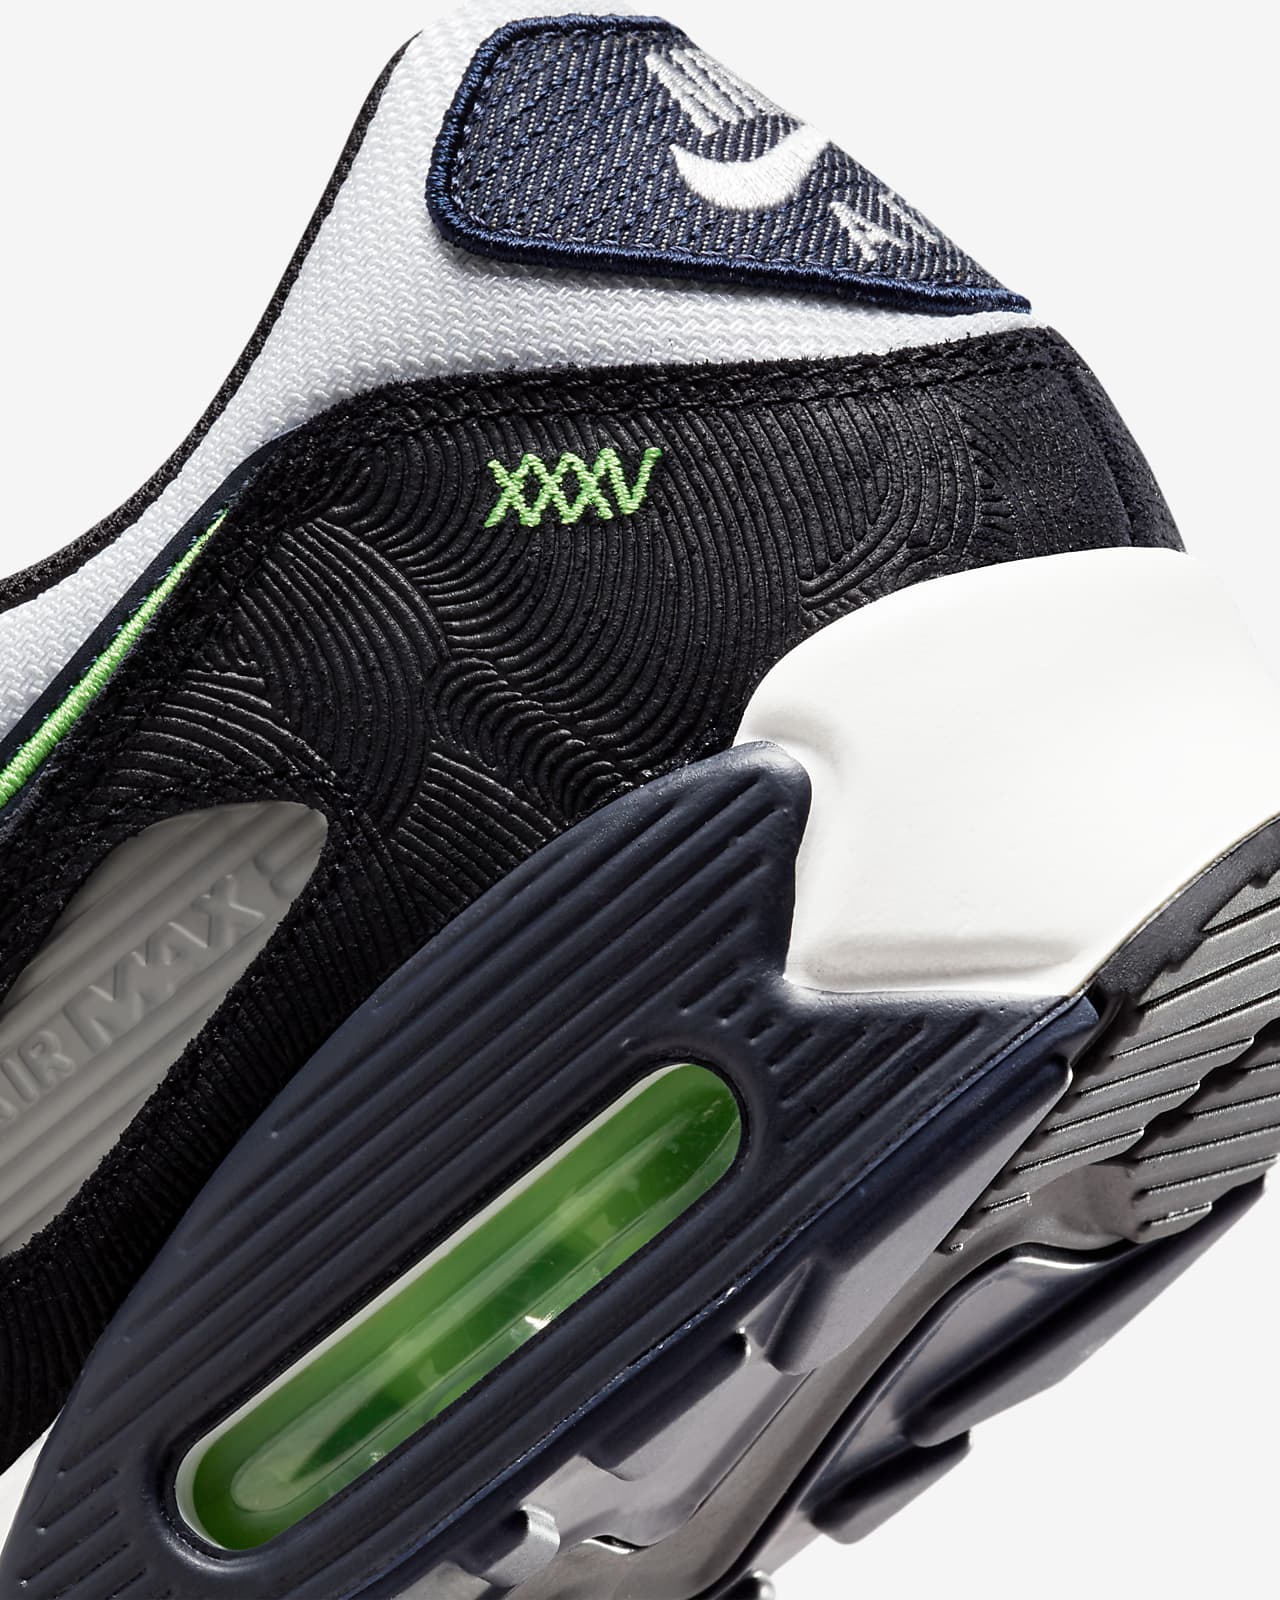 Nike Air Max 90 SE Men's Shoes عصائر الذهبي